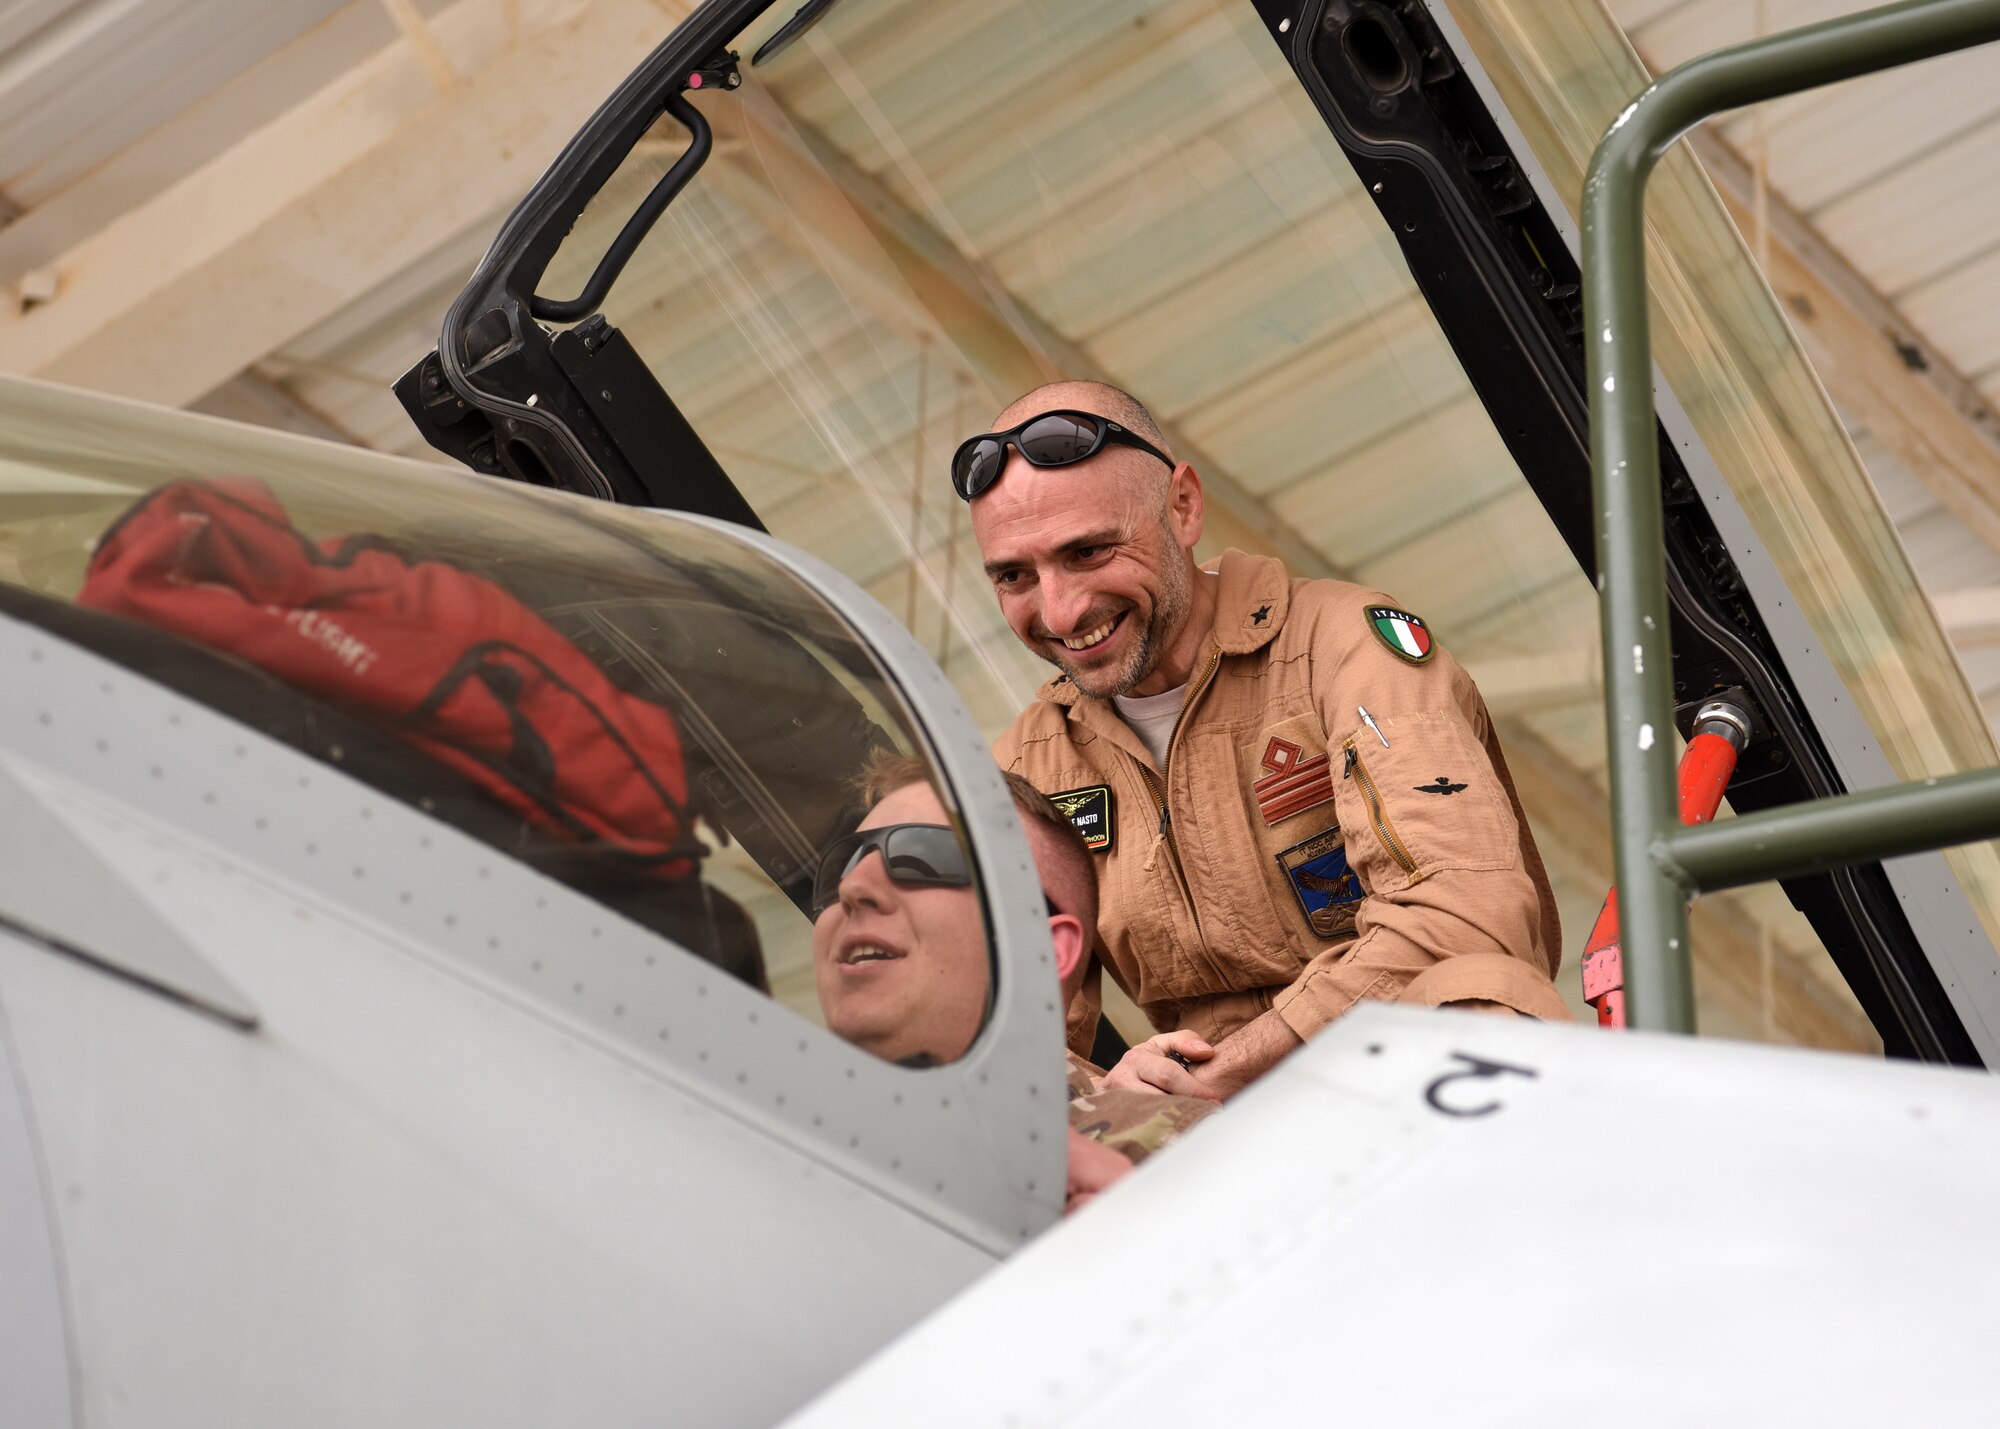 Pilot showcases aircraft to fellow military member.